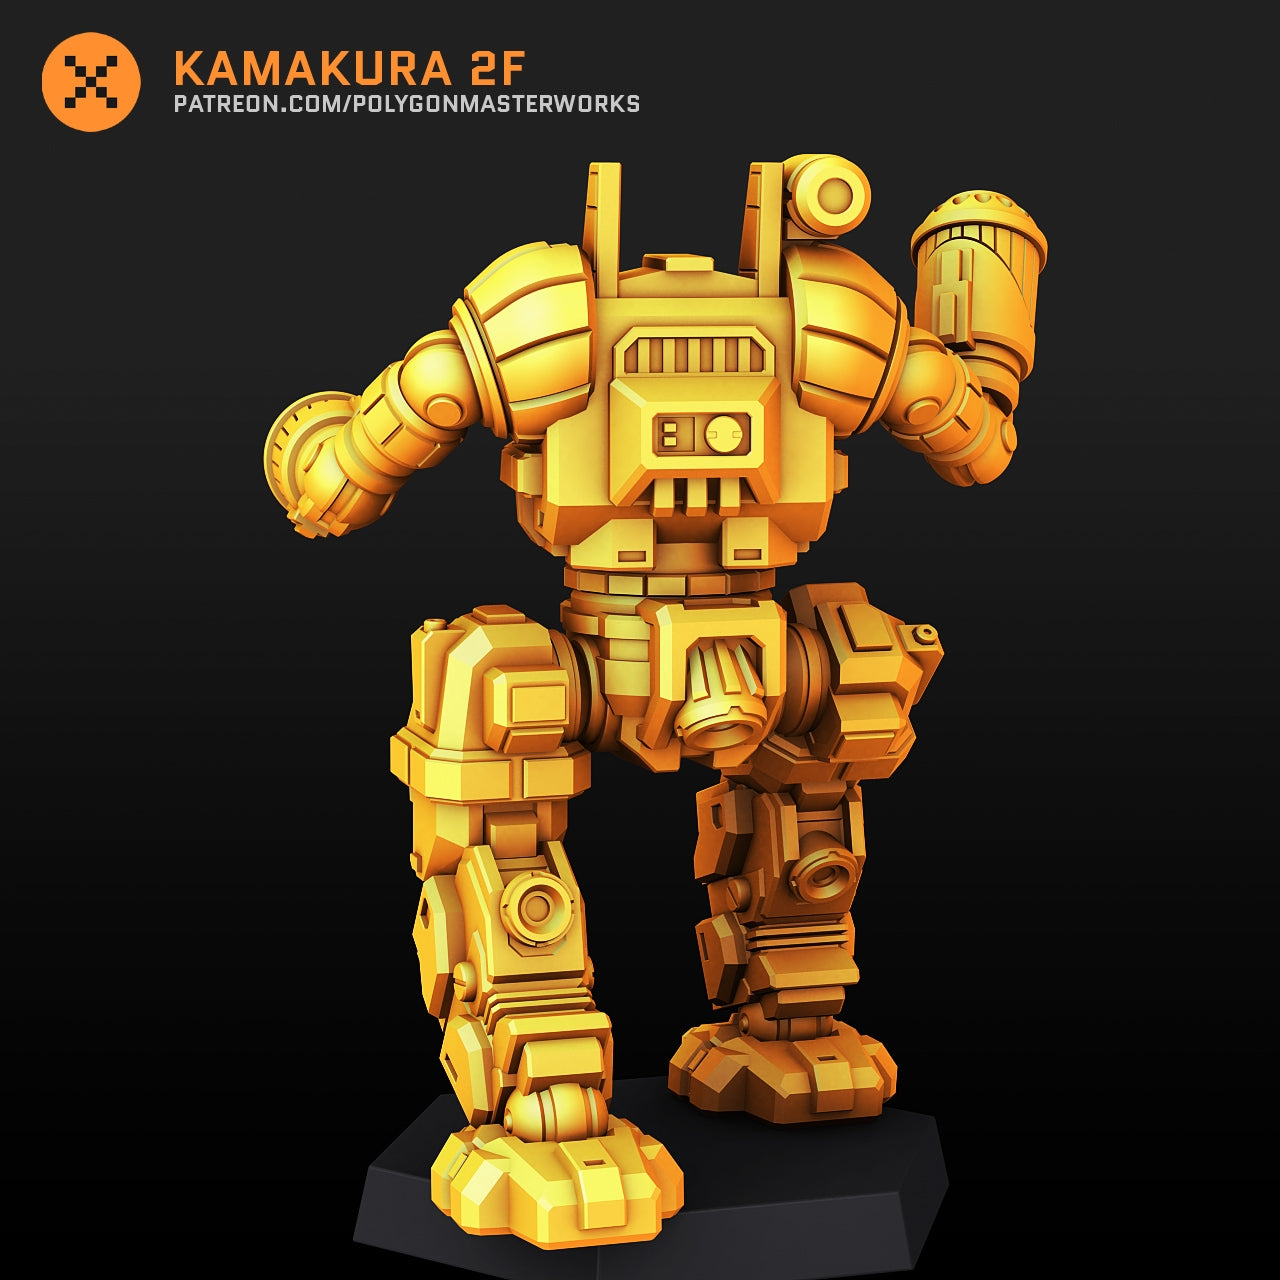 Kamakura 2F (By PMW) Alternate Battletech Mechwarrior Miniatures